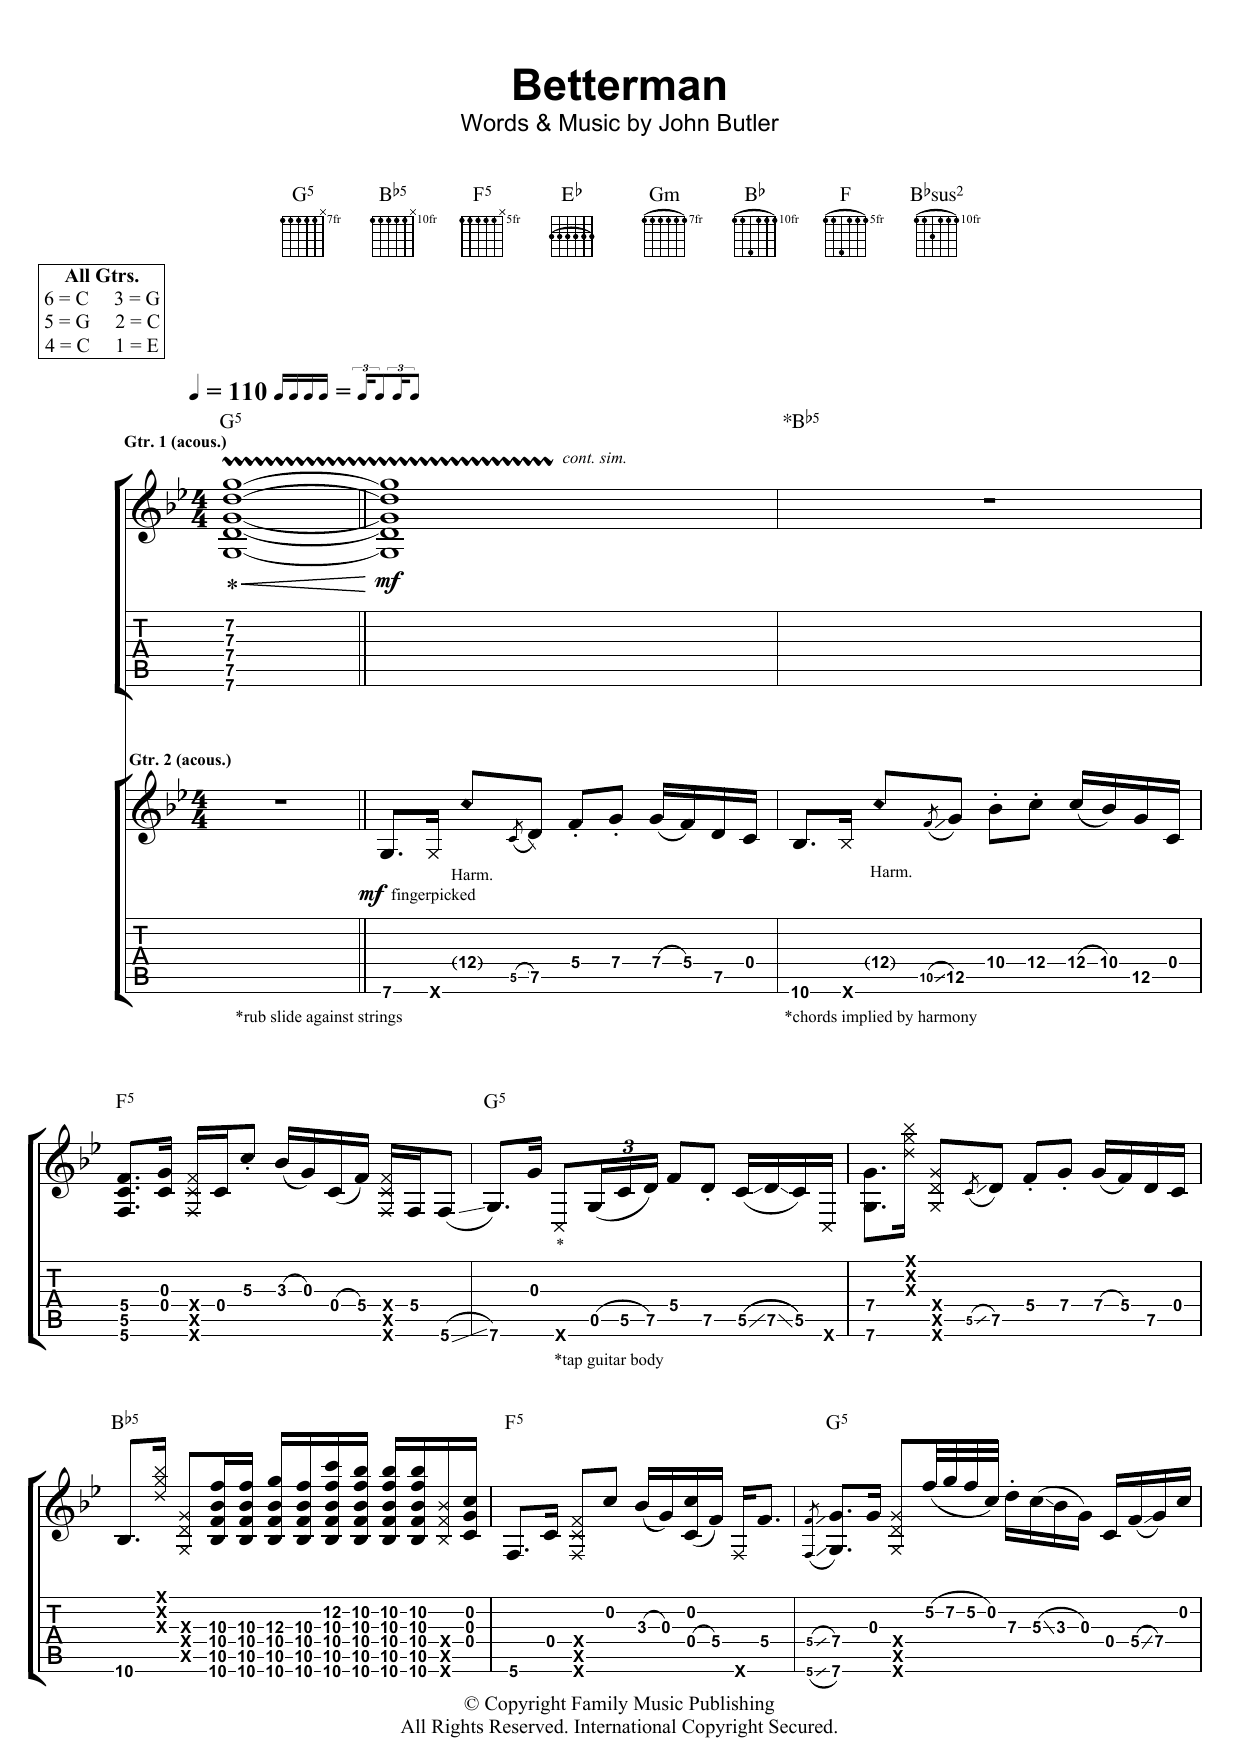 John Butler Betterman Sheet Music Notes & Chords for Guitar Tab - Download or Print PDF